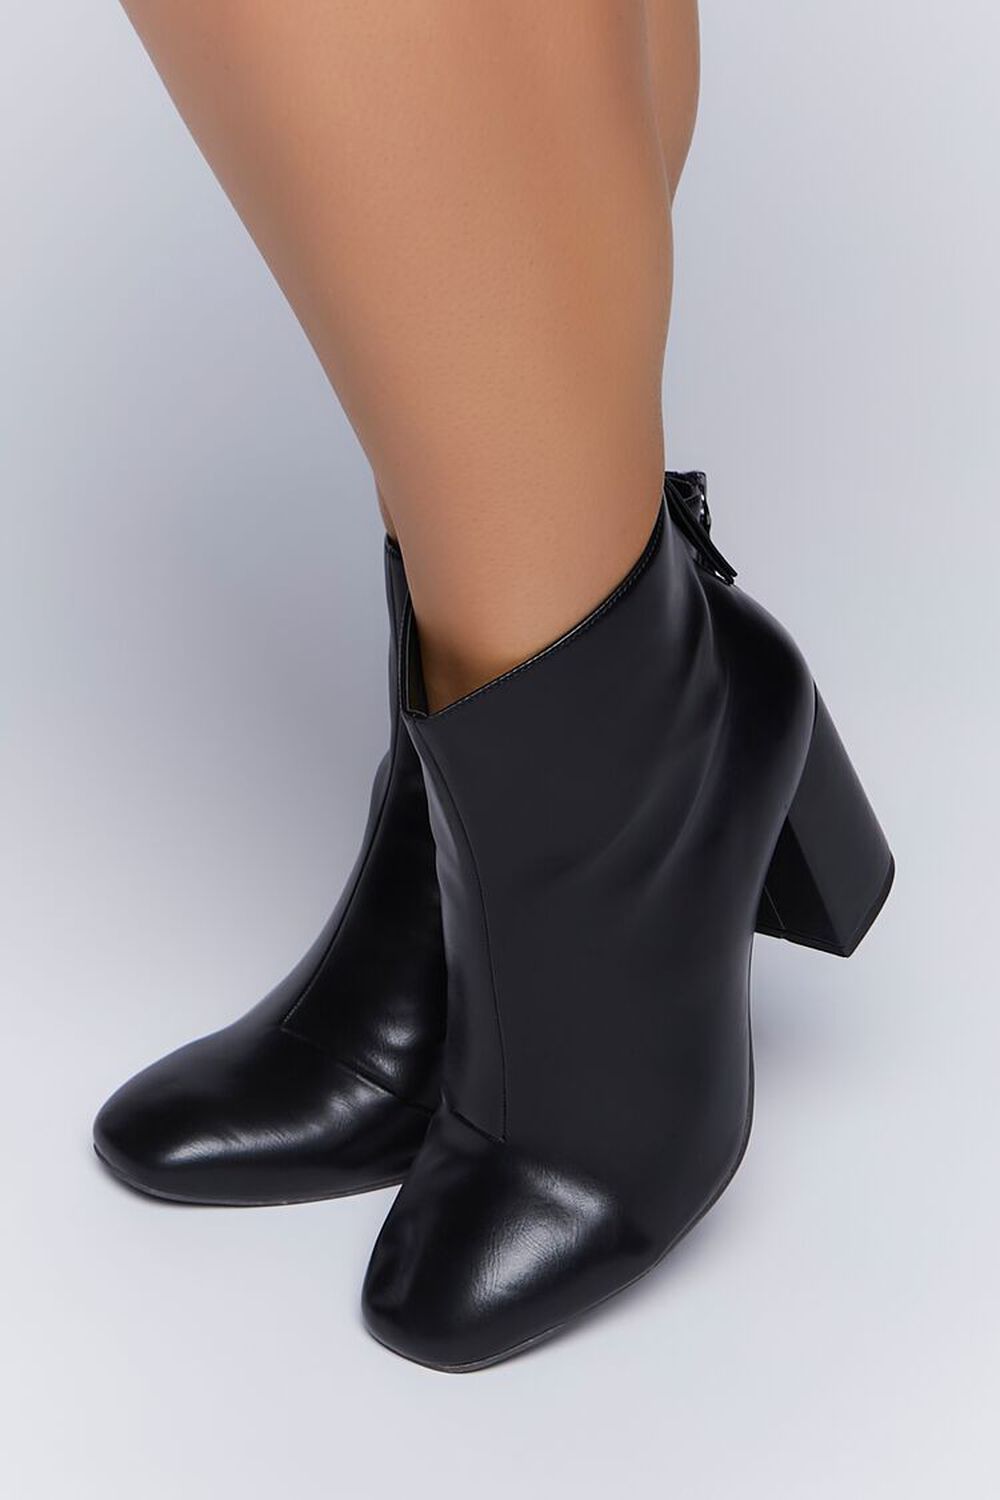 BLACK Faux Leather Block Heel Booties (Wide), image 1